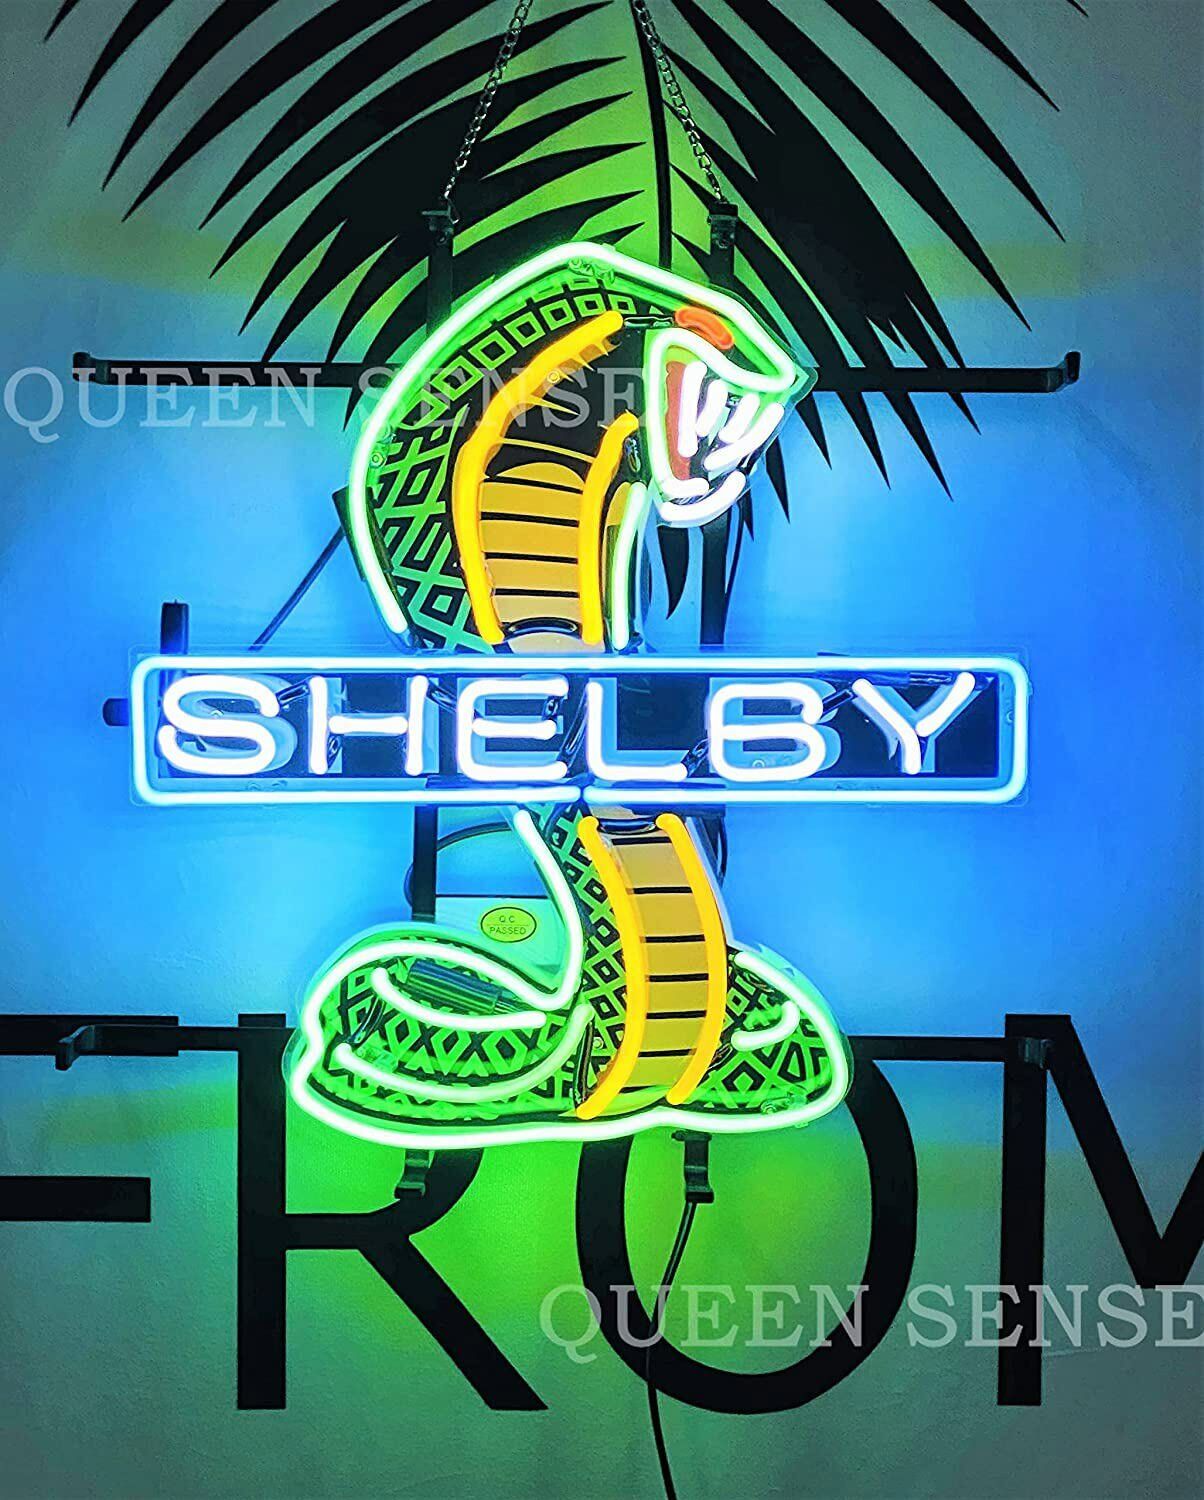 New Shelby Cobra Auto Neon Light Sign Lamp HD Vivid Printing Technology 20